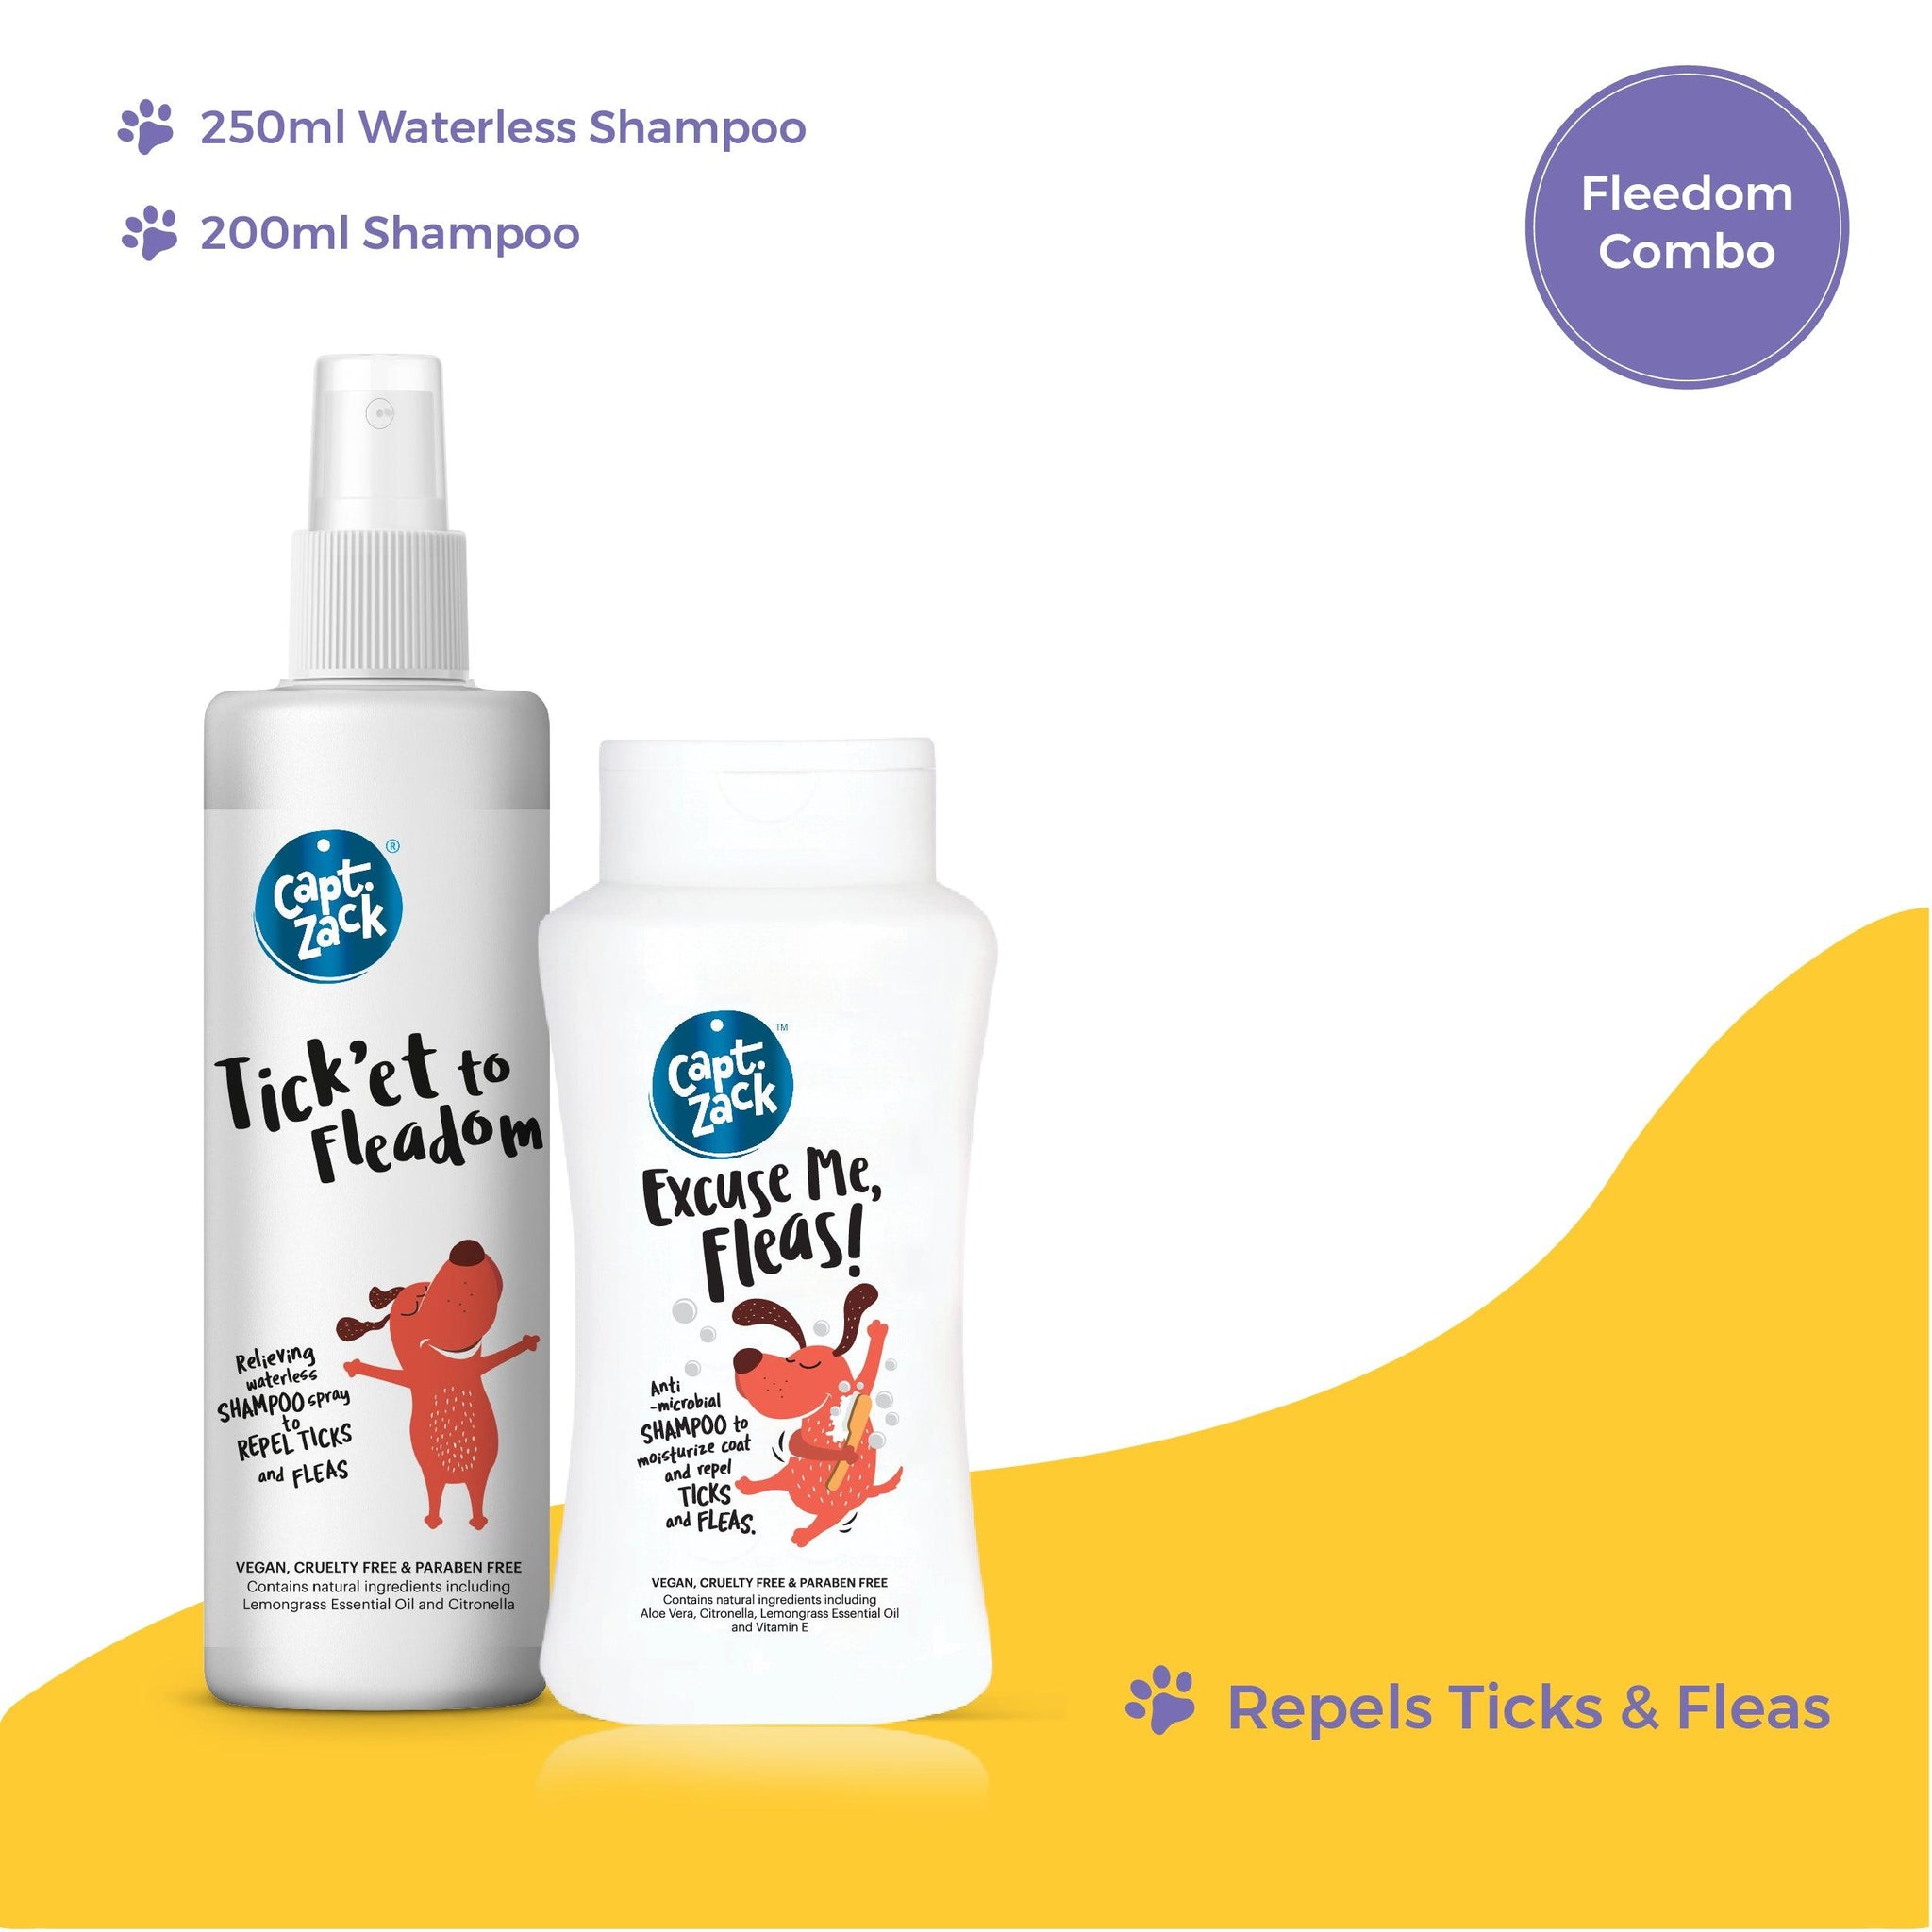 Excuse Me Fleas! Shampoo 200ml + Tick’et to Fleadom Waterless Shampoo 250ml